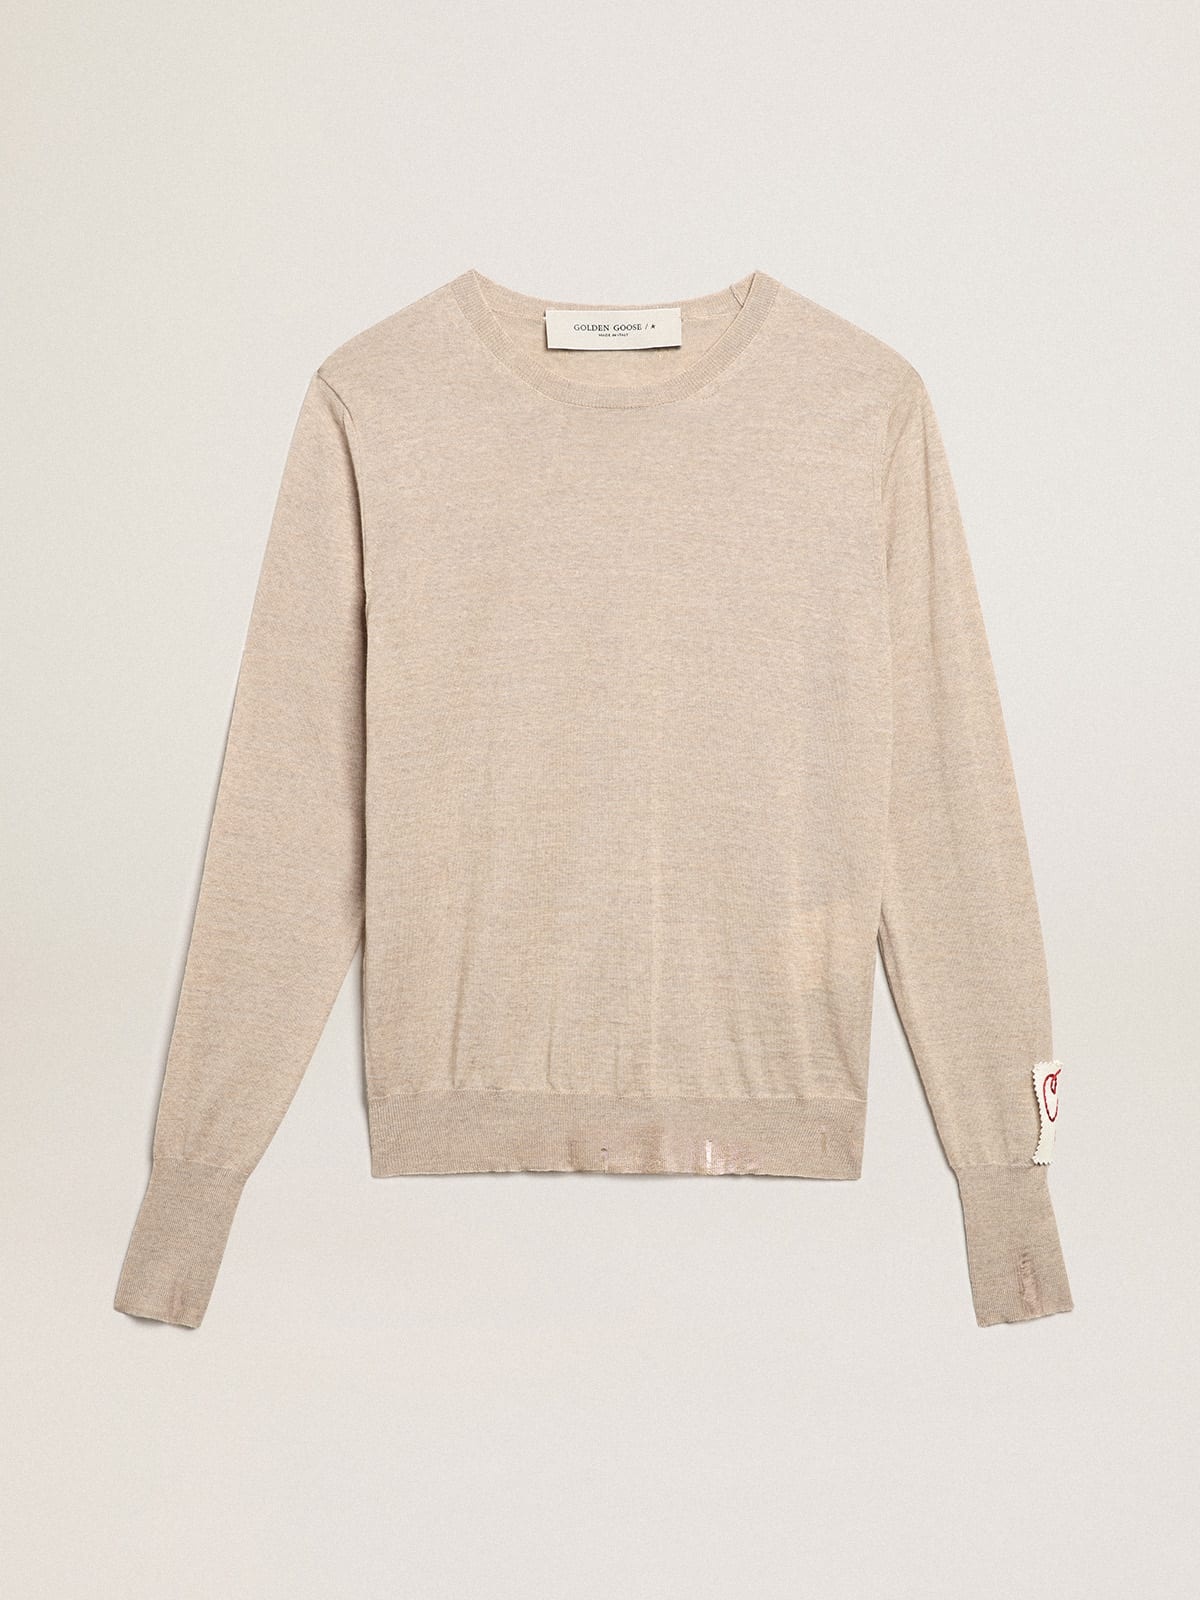 Women's sweater in light brown merino wool - 1